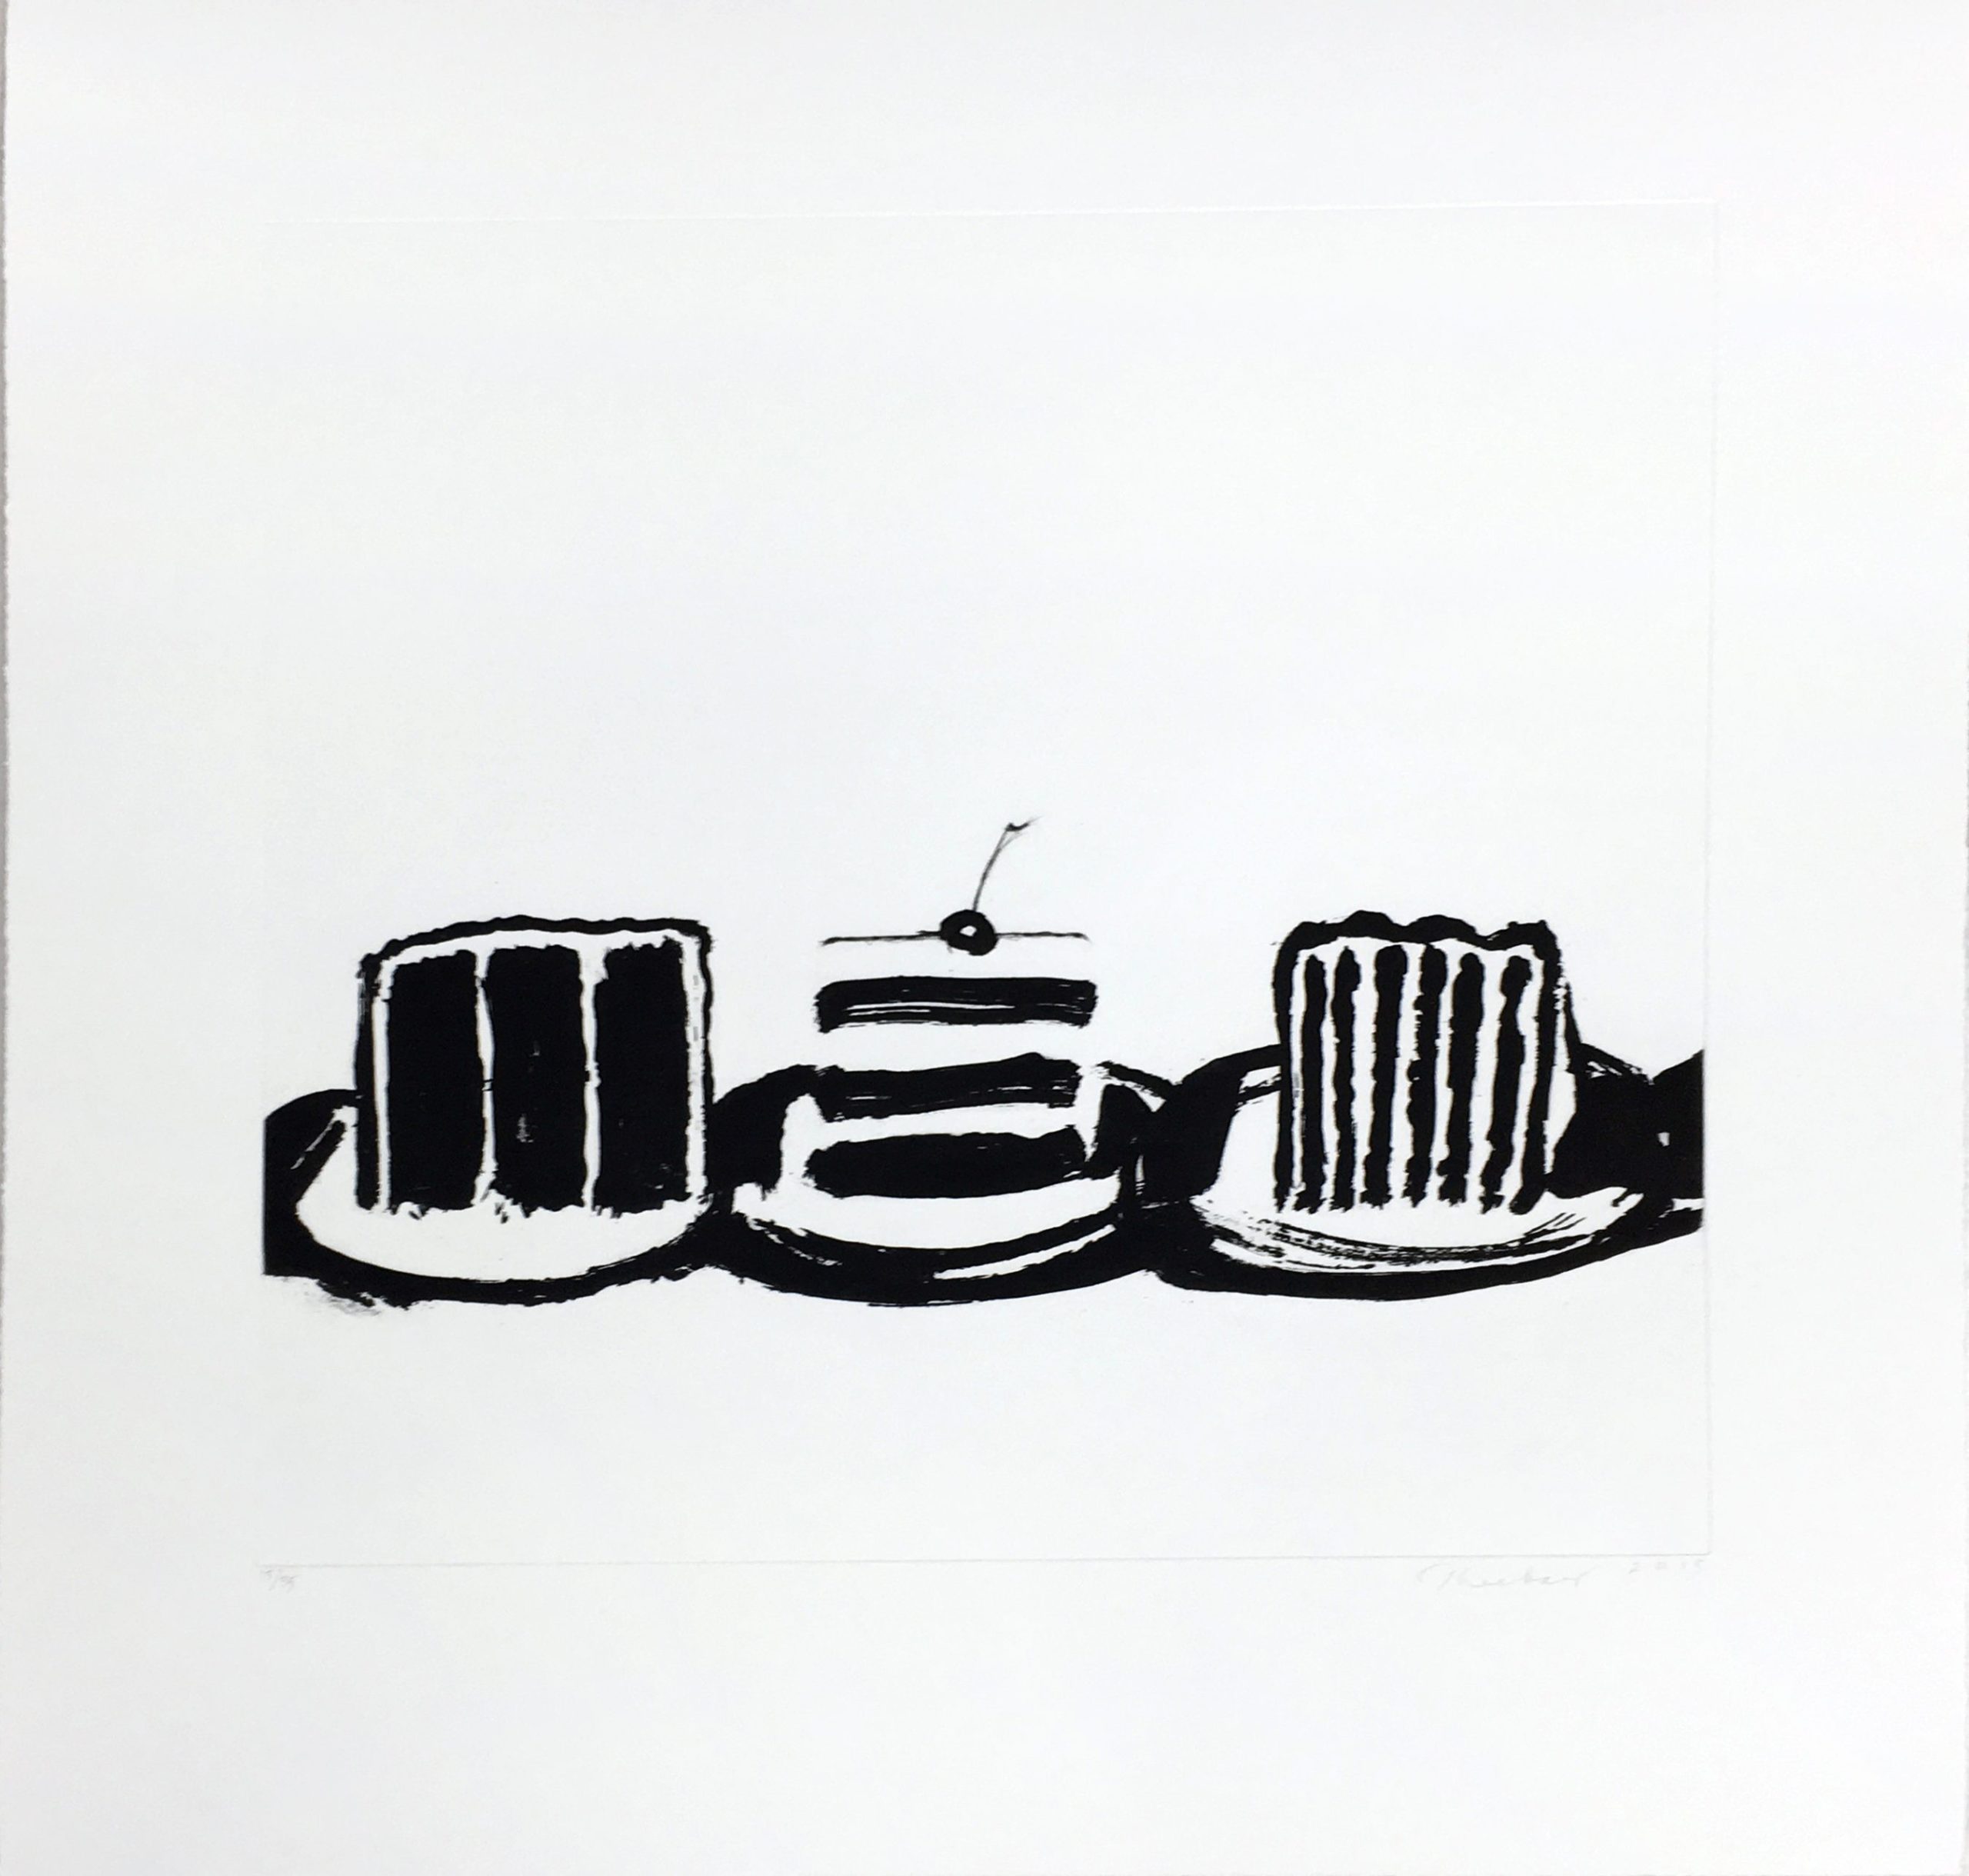 Wayne Thiebaud | Cut Cakes | 2015 | Image of Artists' work.